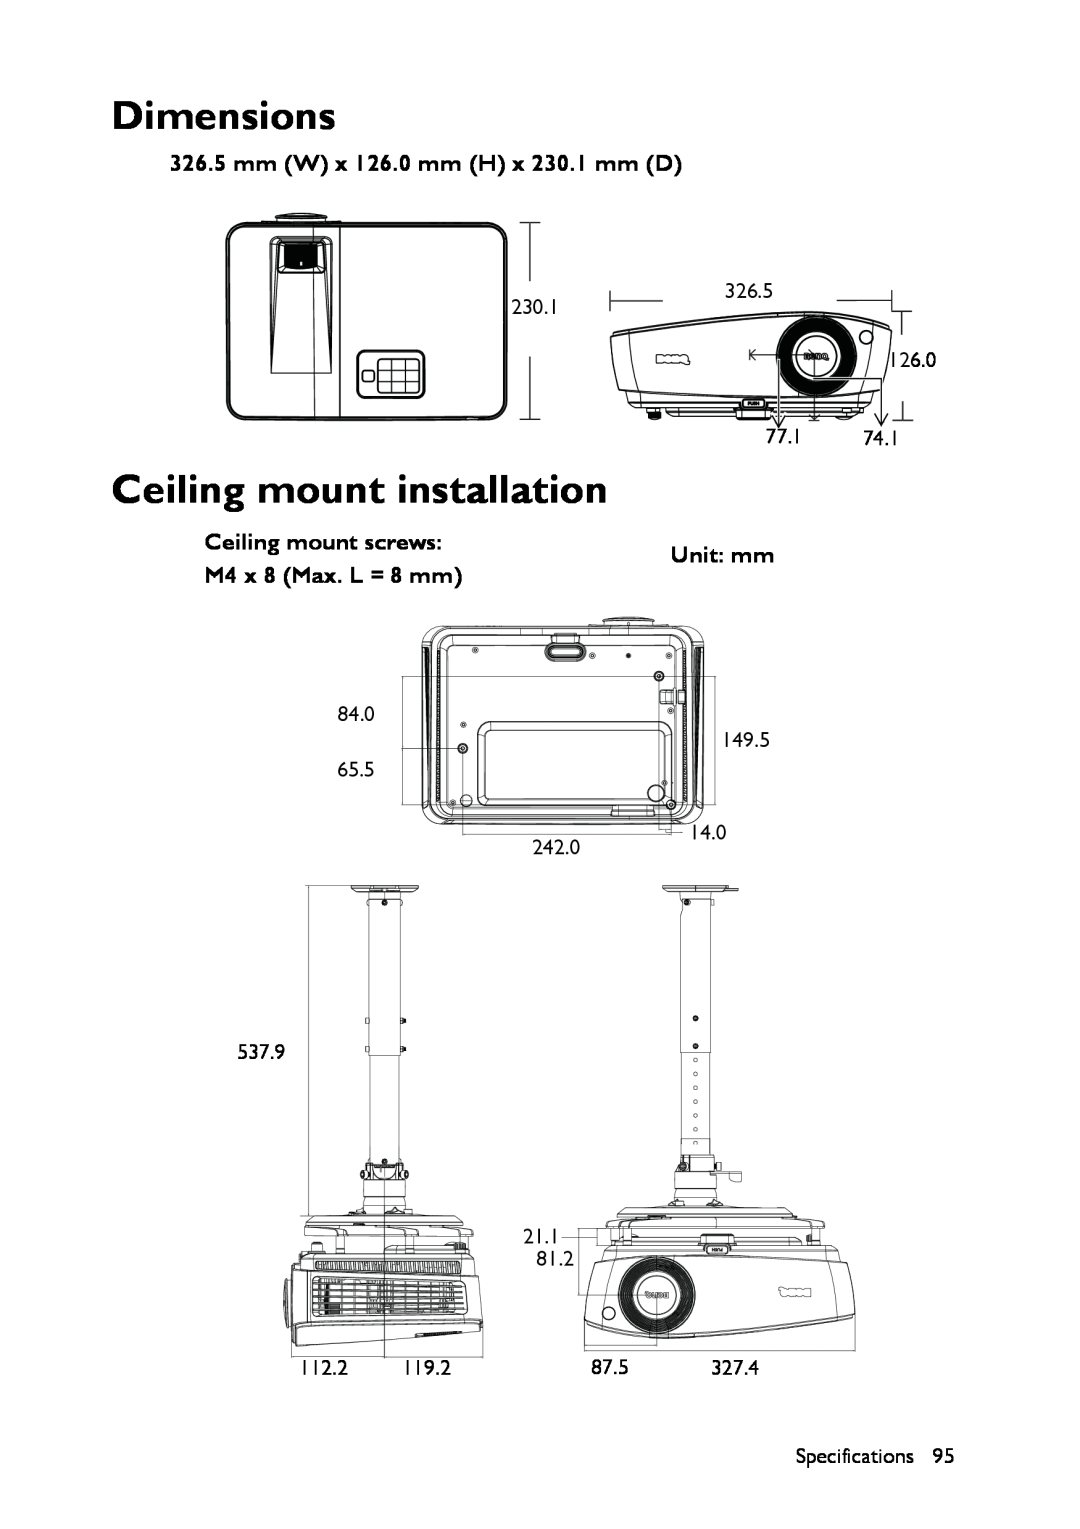 BenQ MX661 Dimensions, Ceiling mount installation, mm W x 126.0 mm H x 230.1 mm D, Ceiling mount screws, Unit mm 